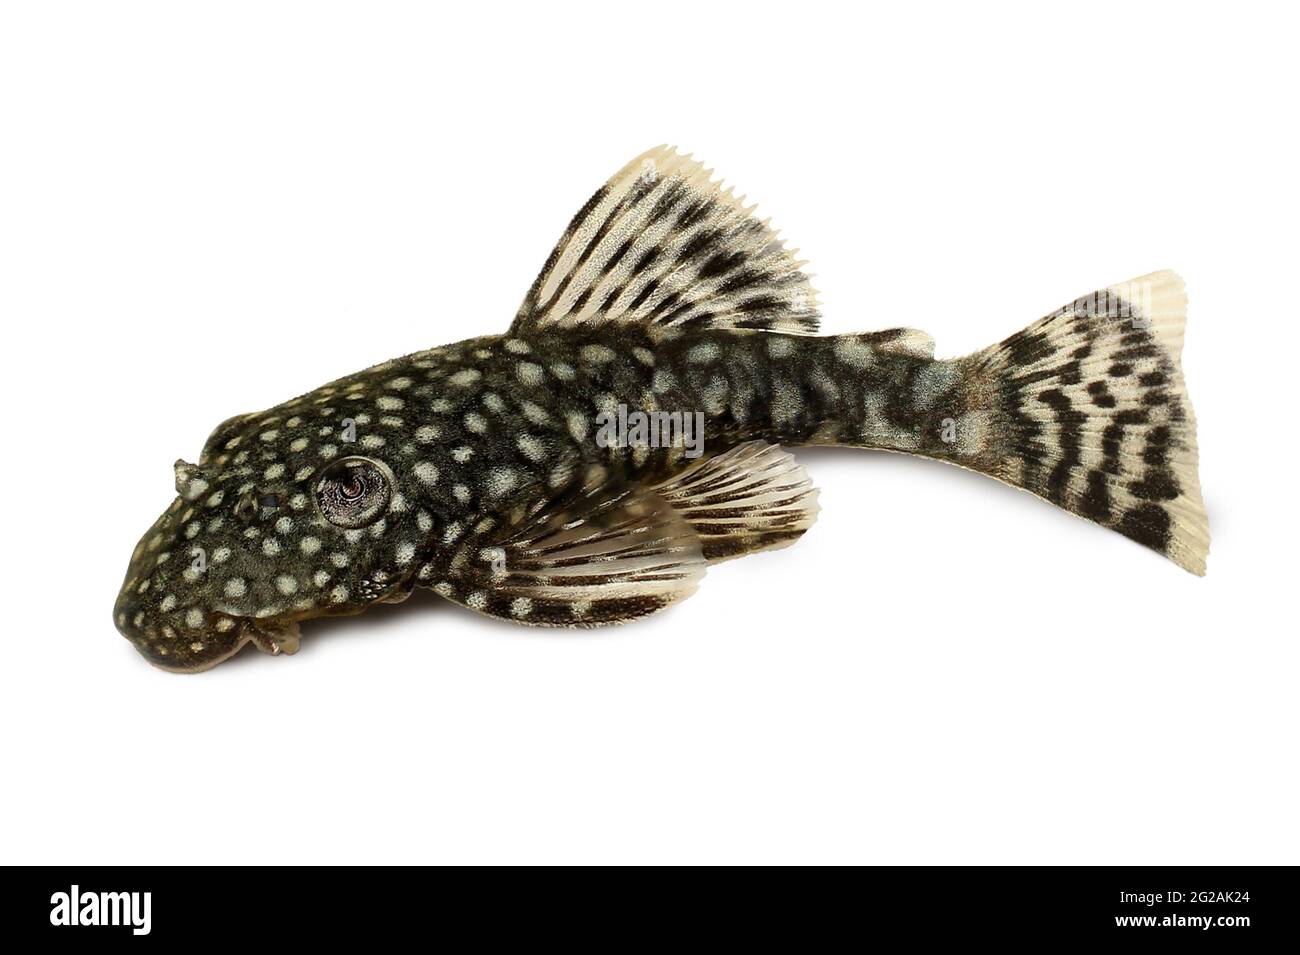 Catfish aquarium Cut Out Stock Images & Pictures - Alamy